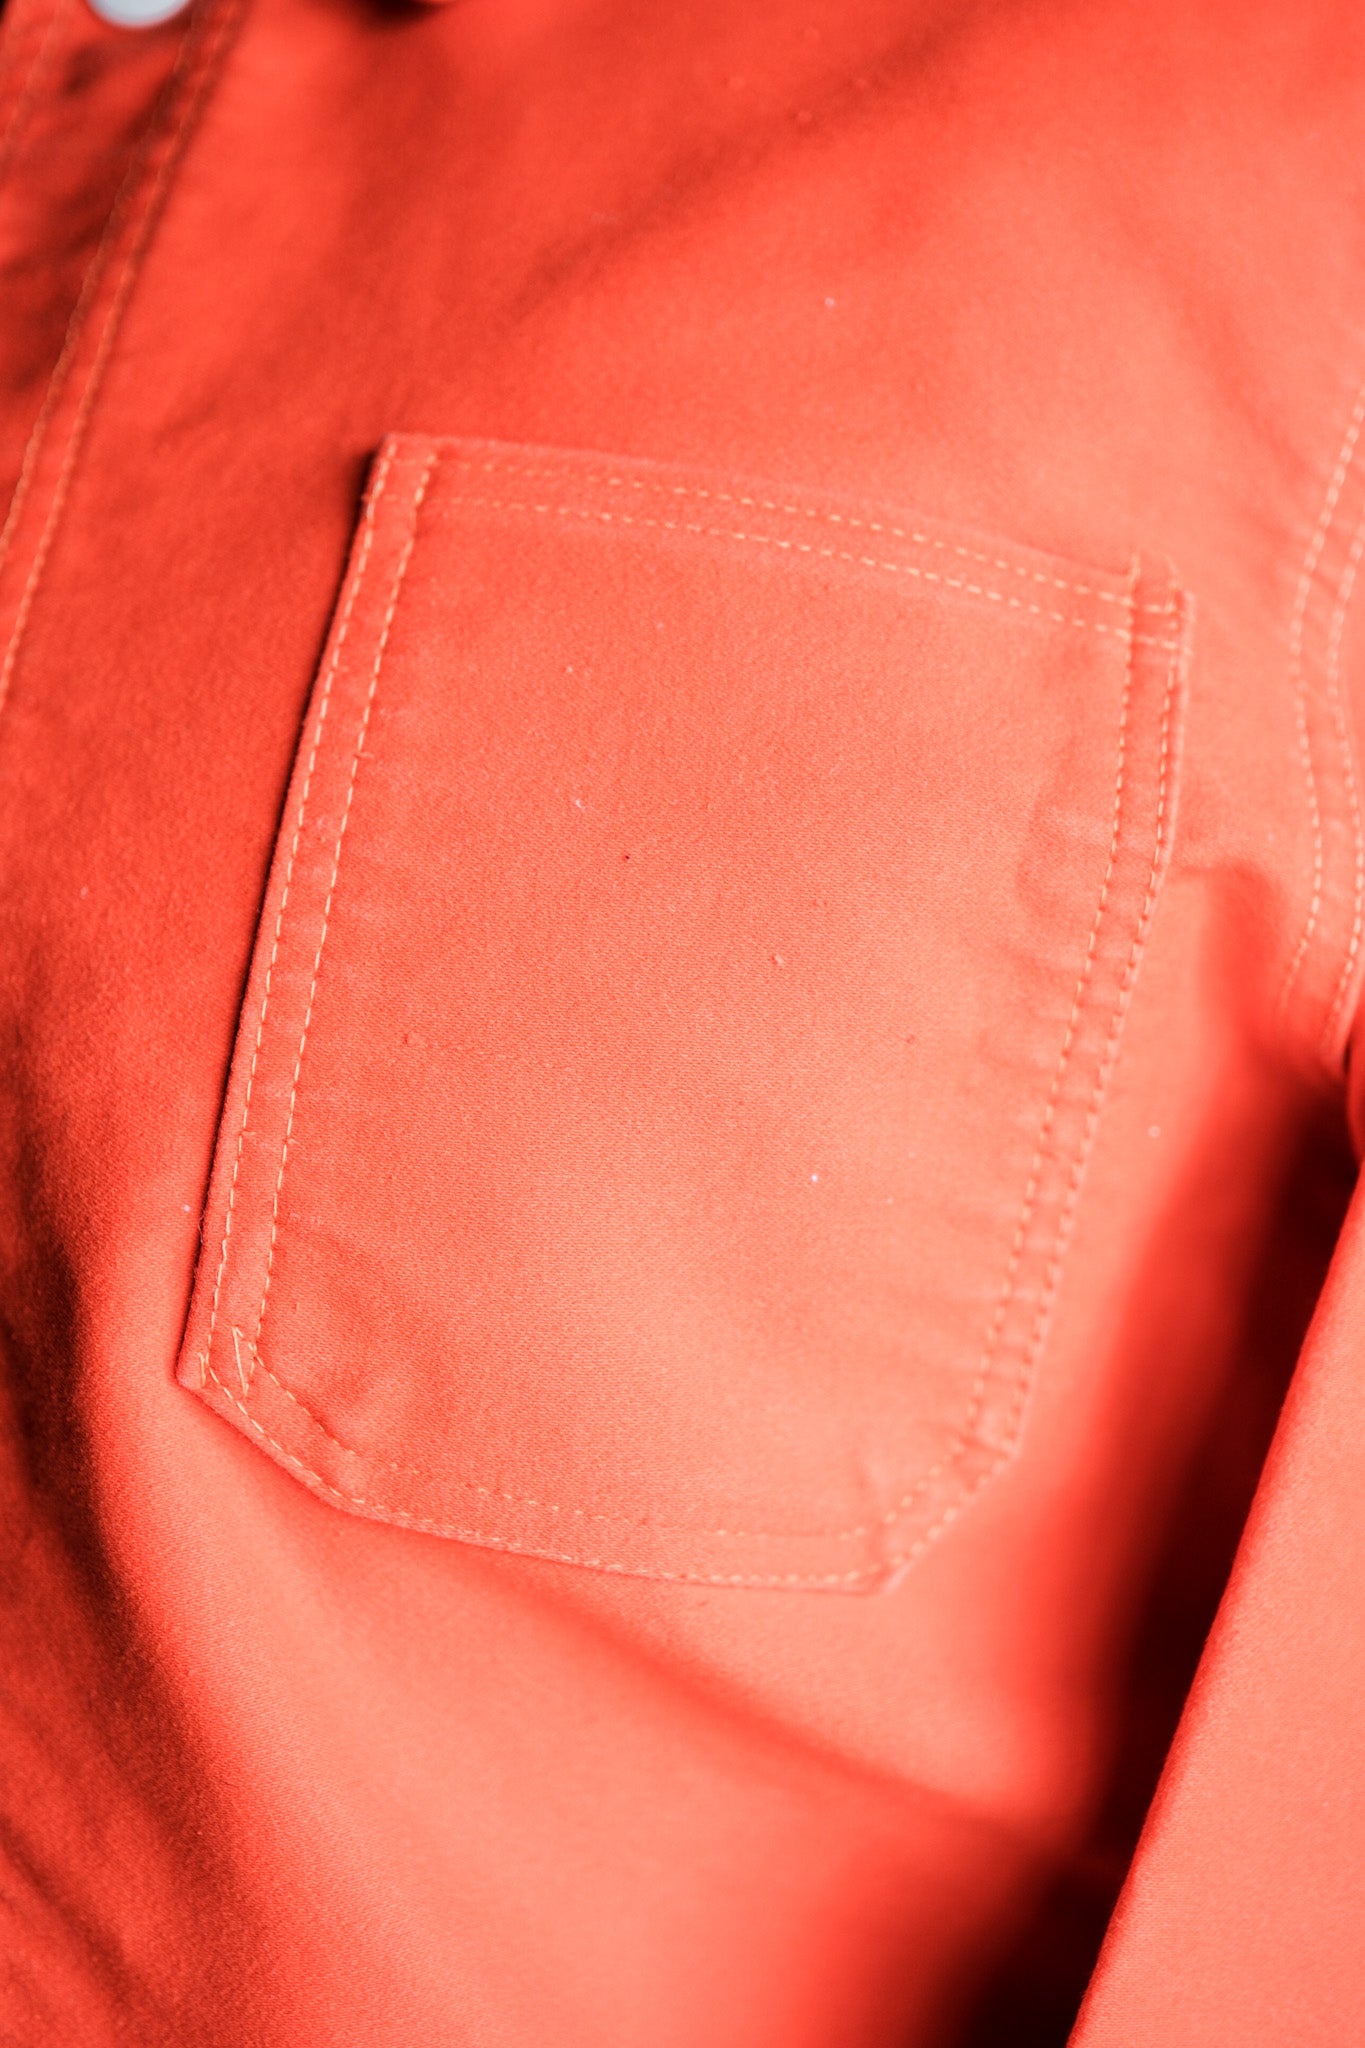 [~ 70's] French vintage orange moleskin work jacket size.t42